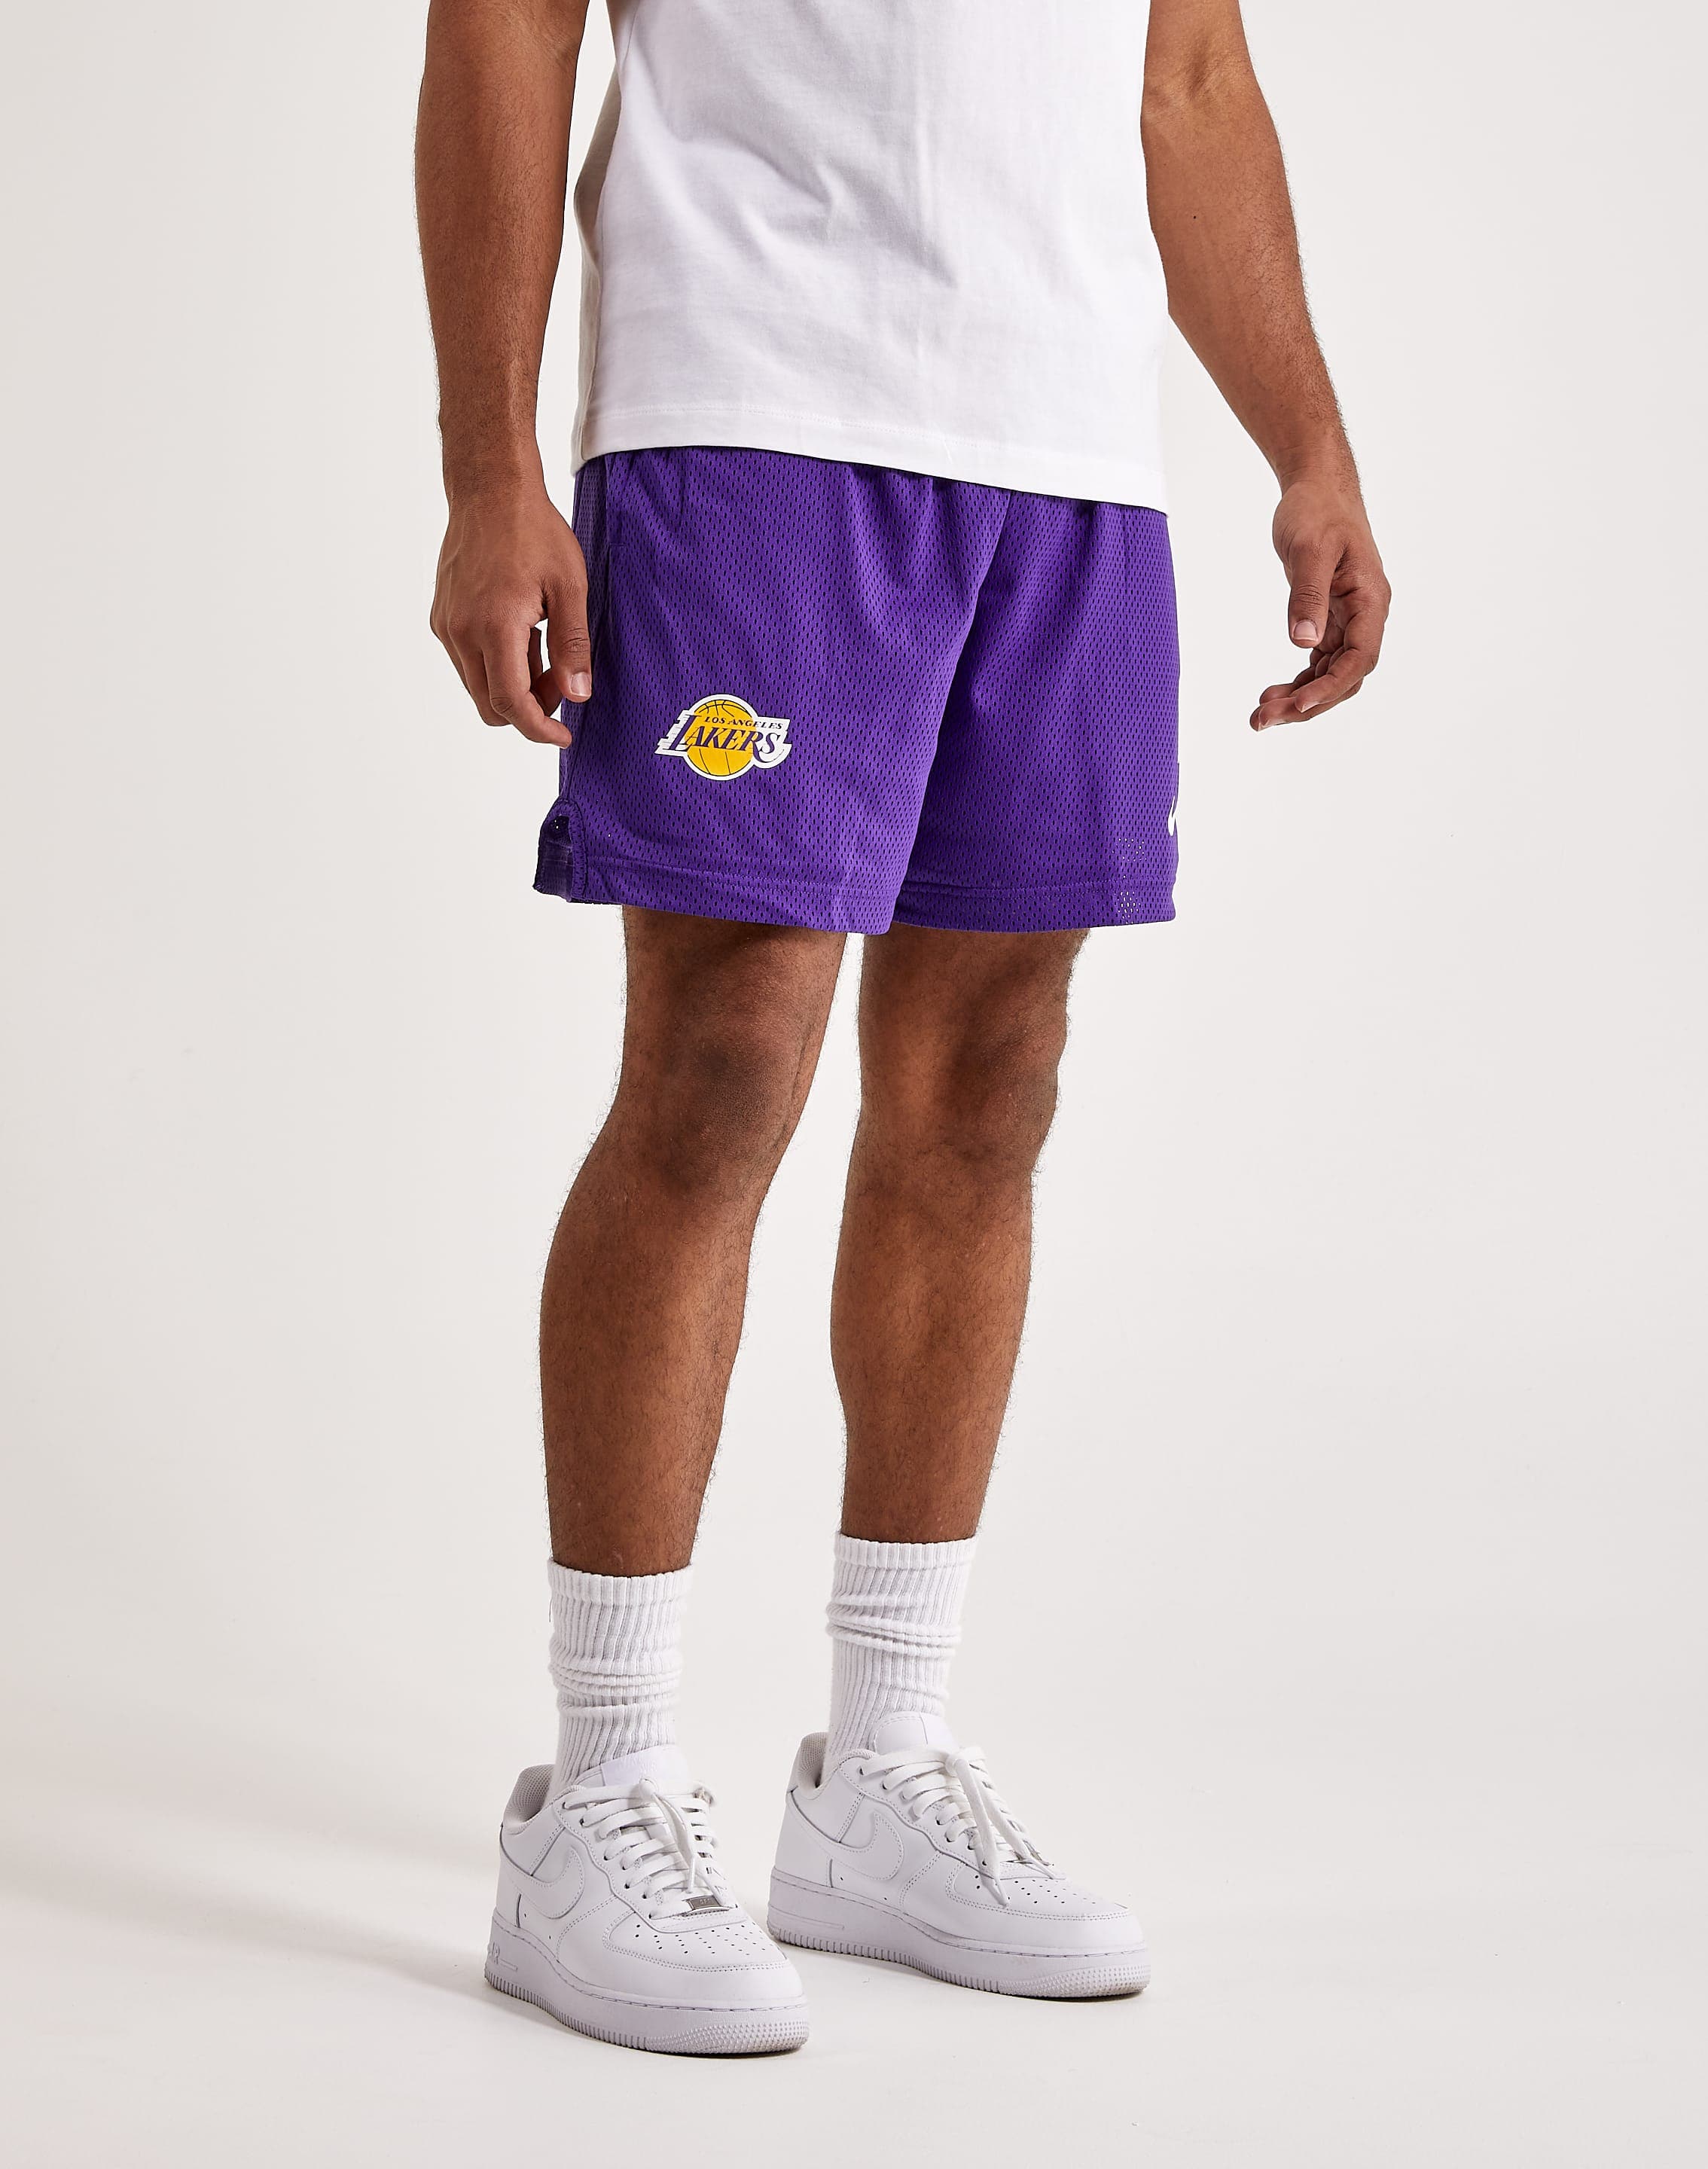 Nike Los Angeles Lakers Fleece Shorts Mens Shorts White Purple